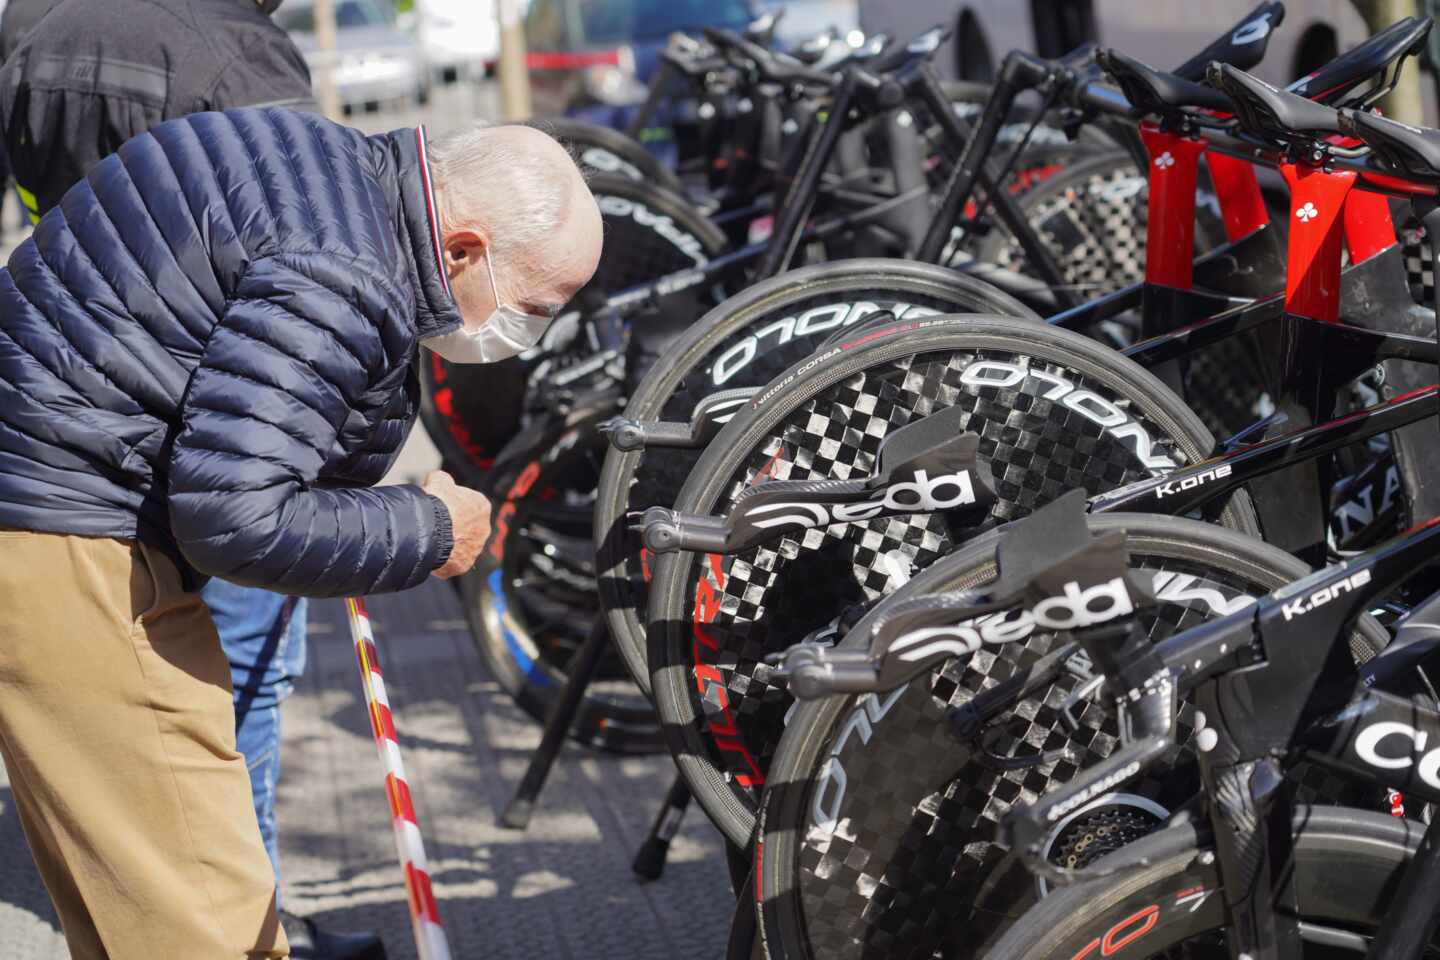 Un hombre observa variass bicicletas durante una etapa de la Vuelta al País Vasco